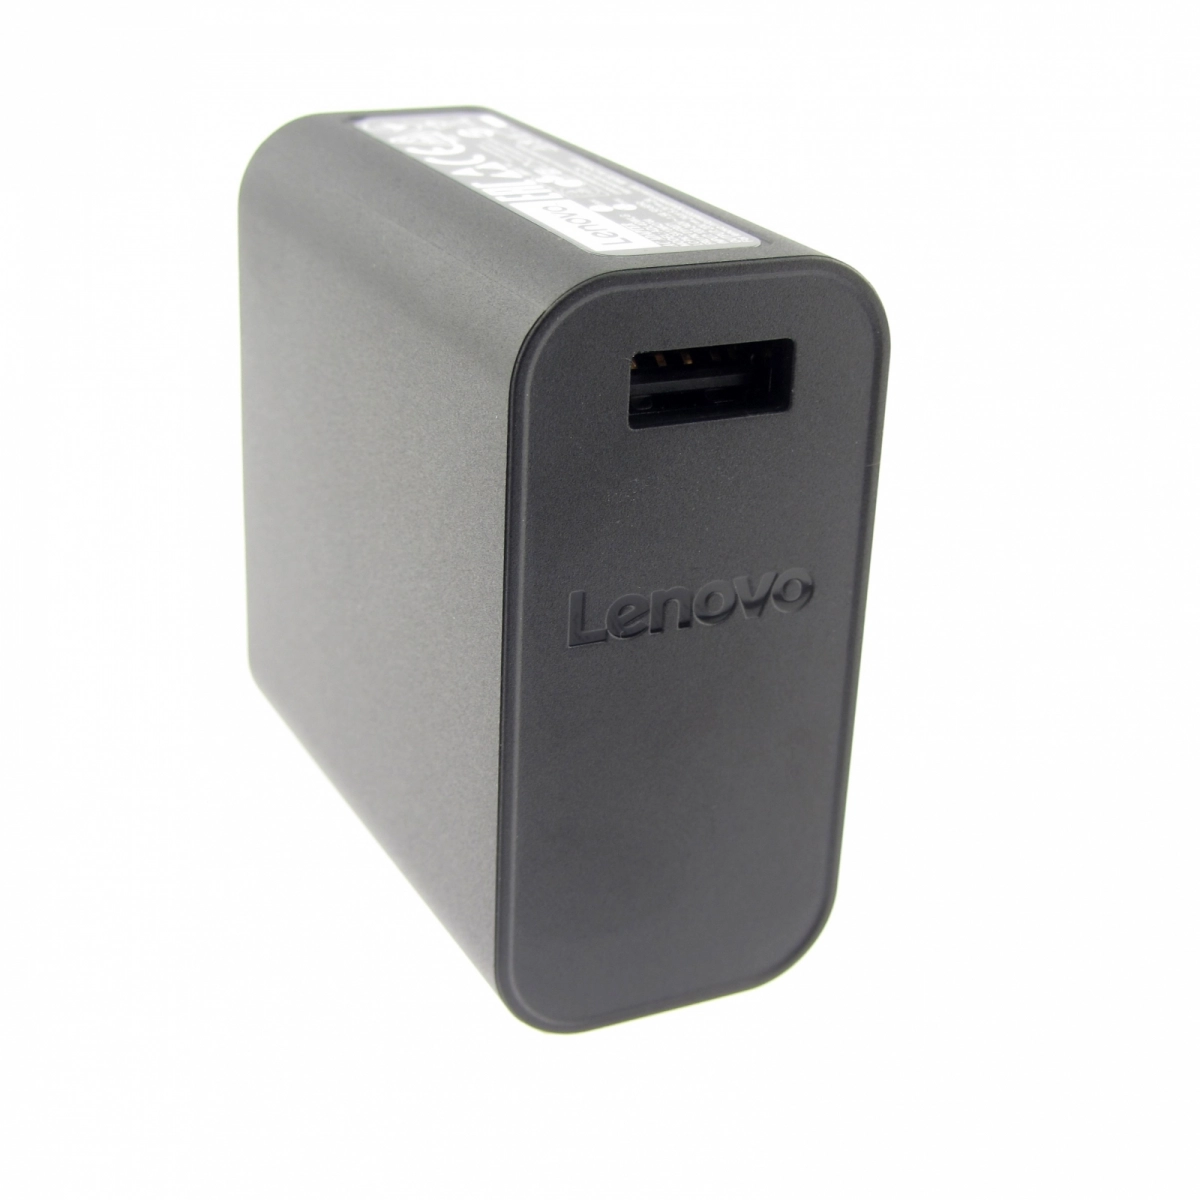 Original Netzteil für LENOVO ADL40WCB 36200580, 20V, 2A, Stecker USB, ohne USB-Kabel